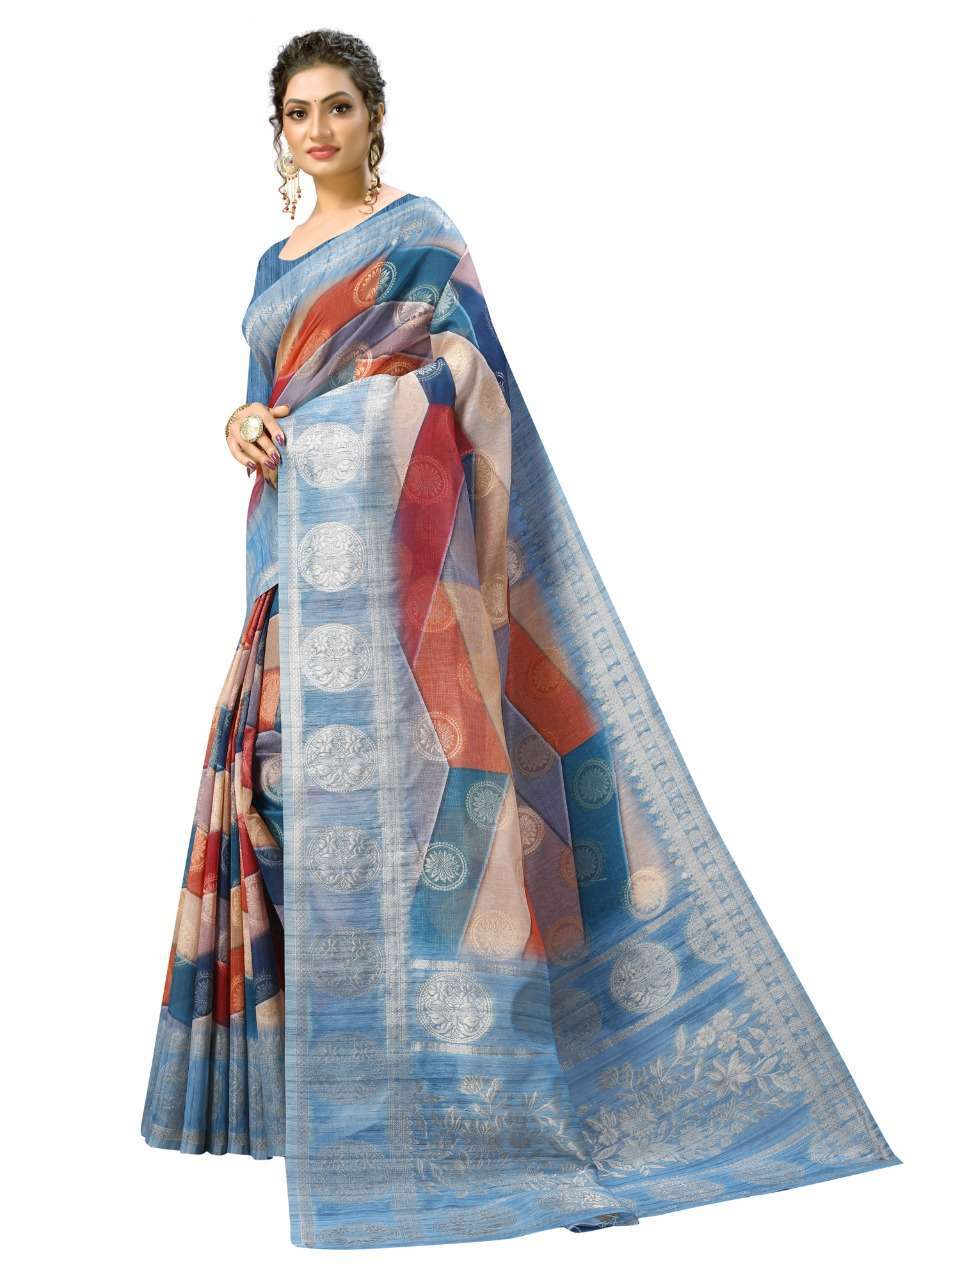 Mishri Creation Khicha Silk With Digital Print Sarees Collec...